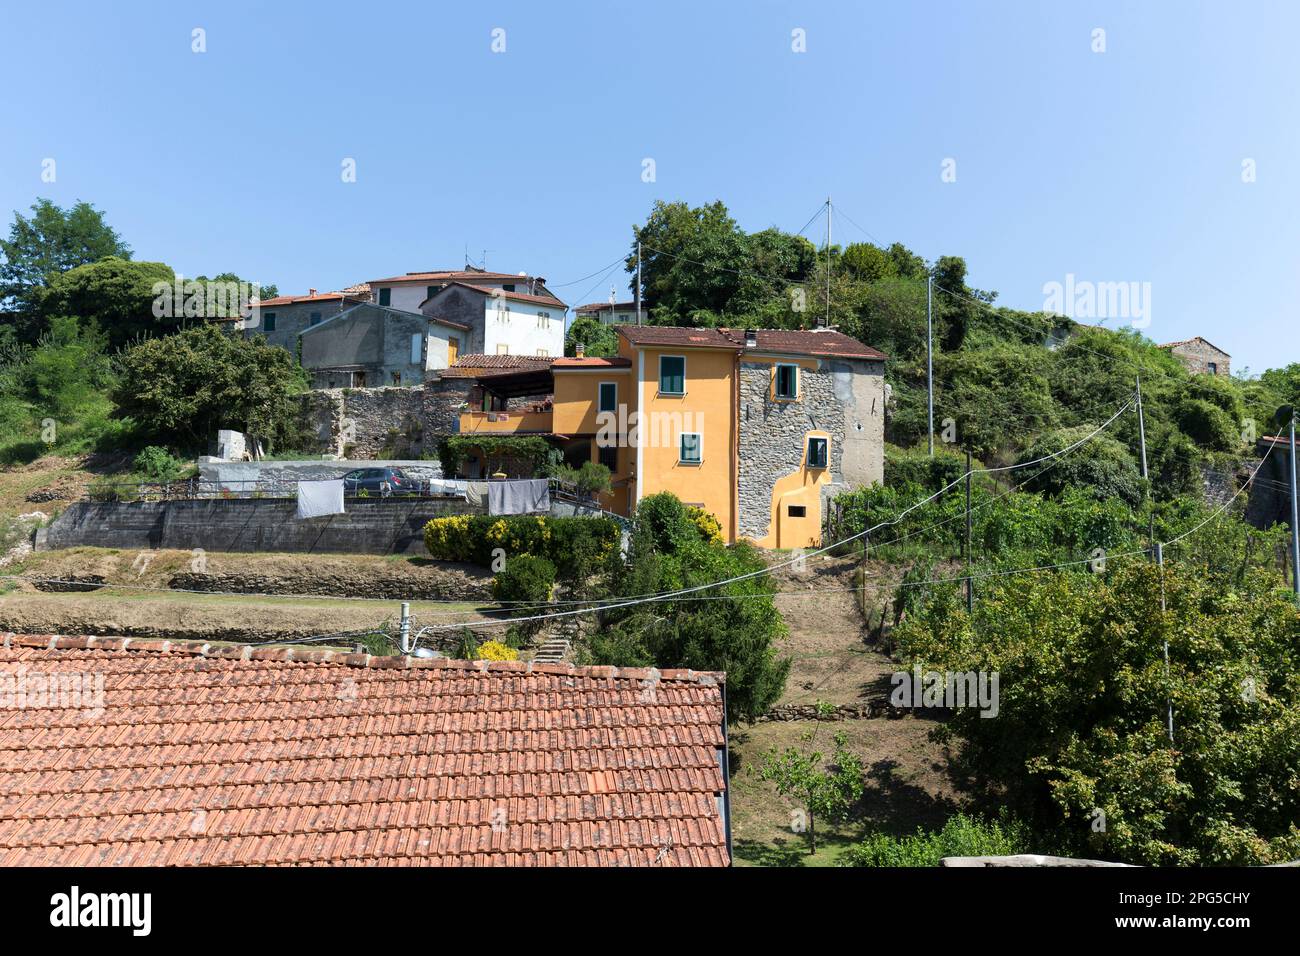 Lunigiana, Italy - August 14, 2020: rural area in Lunigiana along the via Francigena pilgrimage route Stock Photo